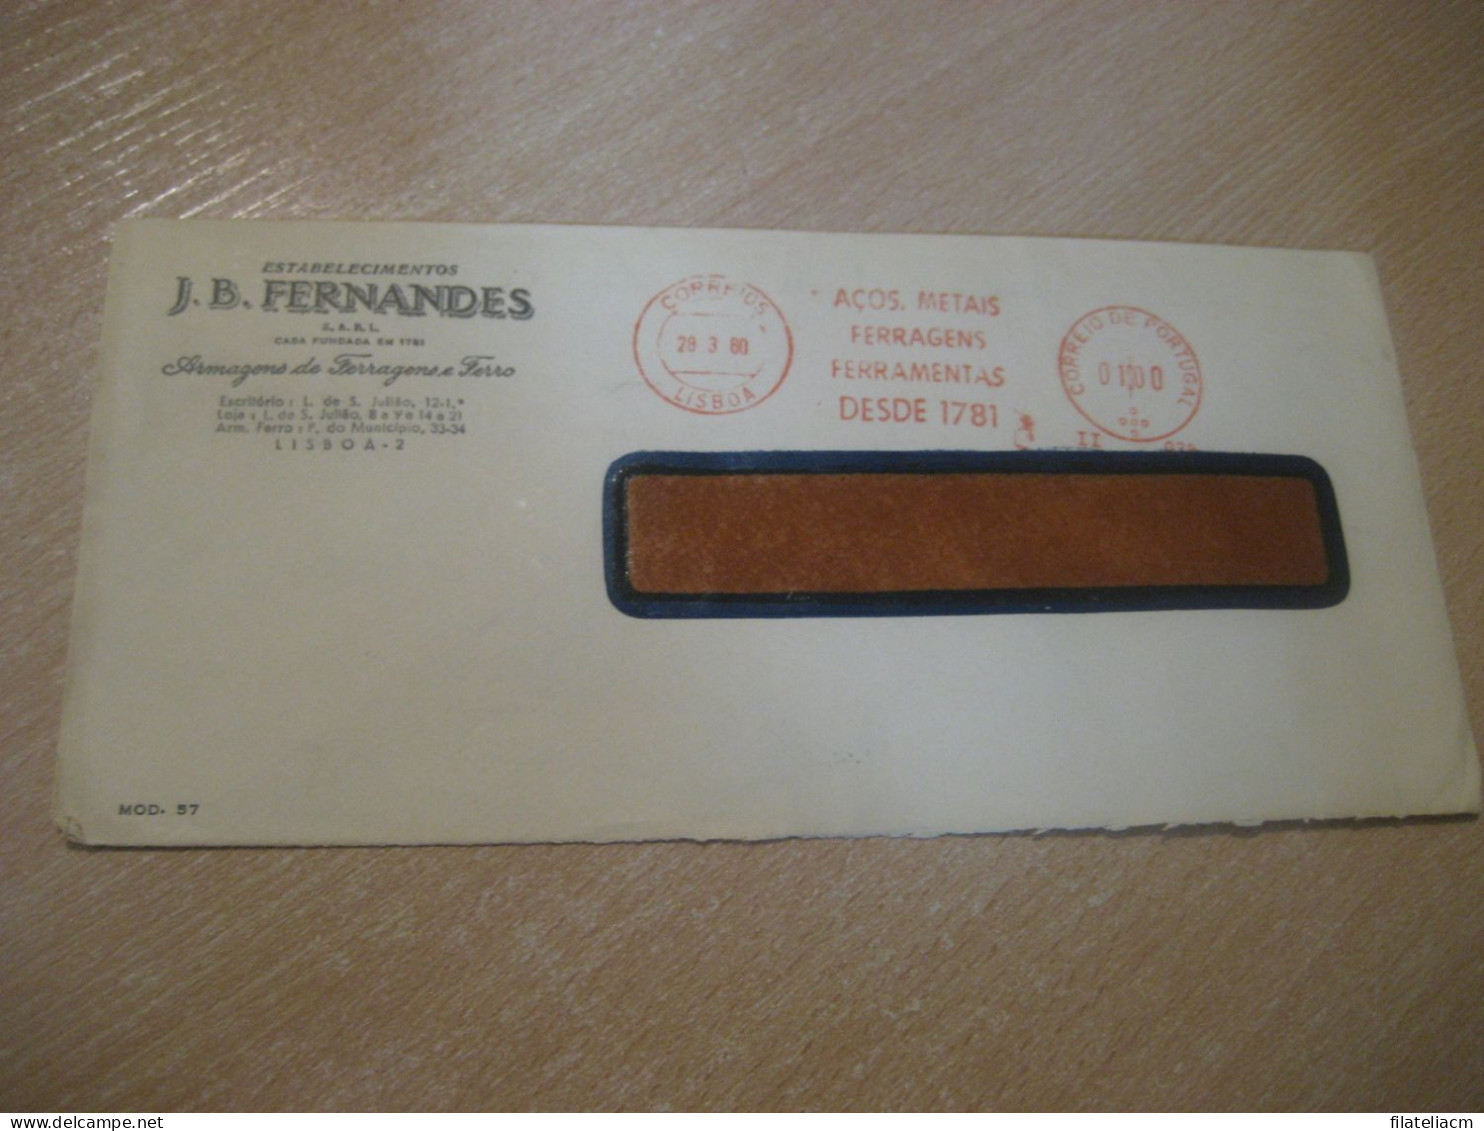 LISBOA 1960 Fernandes Metais Ferragens Ferramentas Meter Mail Cancel SURFORM Cover PORTUGAL - Covers & Documents